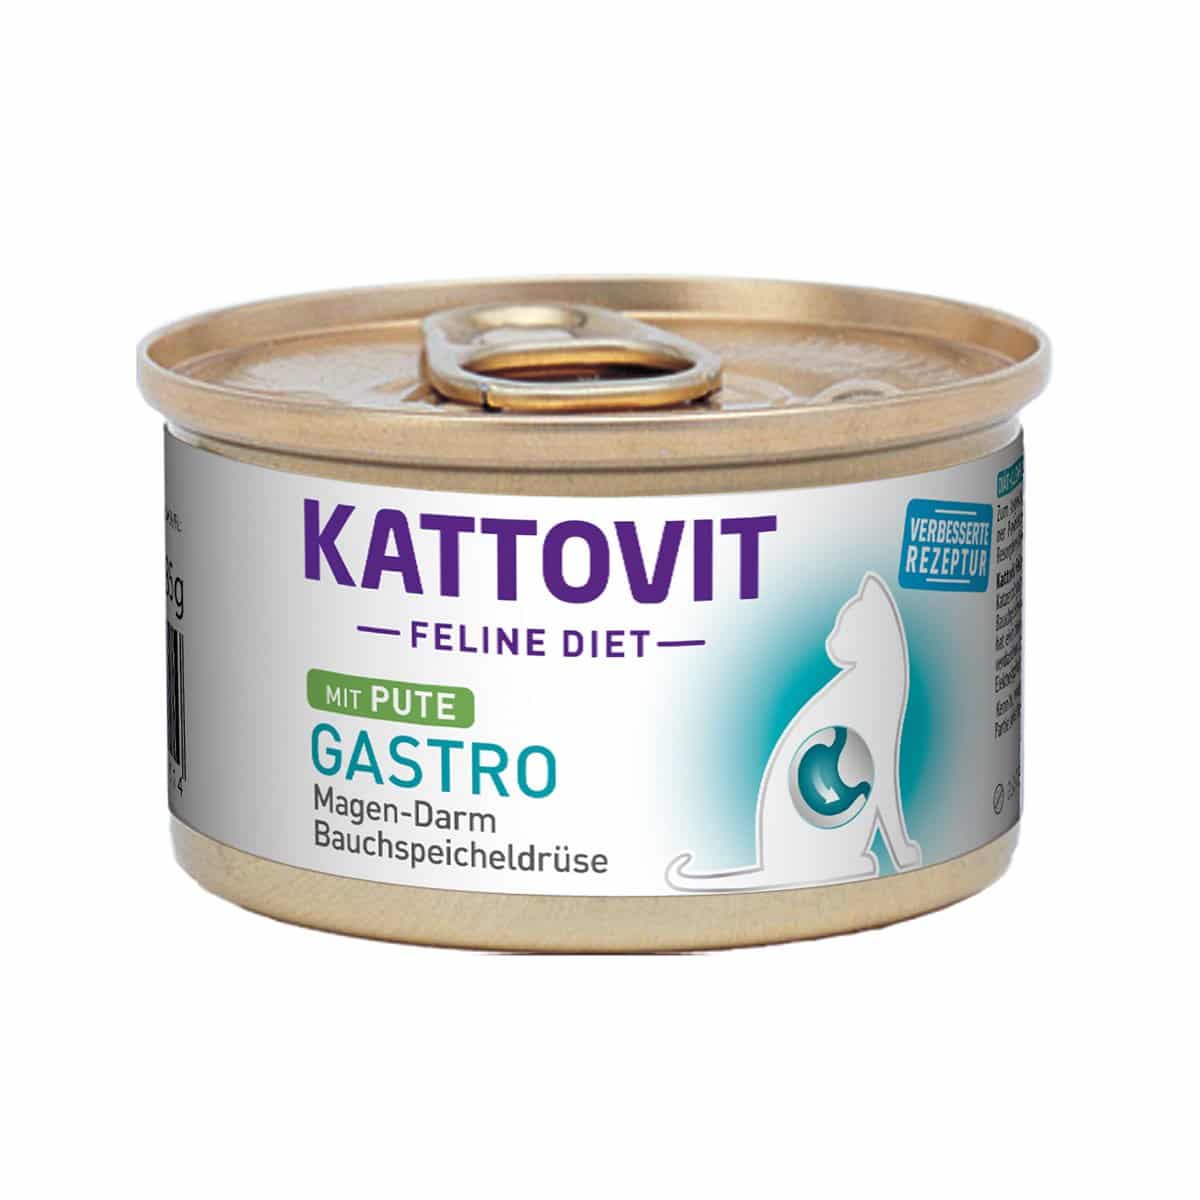 KATTOVIT Feline Diet Gastro Pute 24x85g